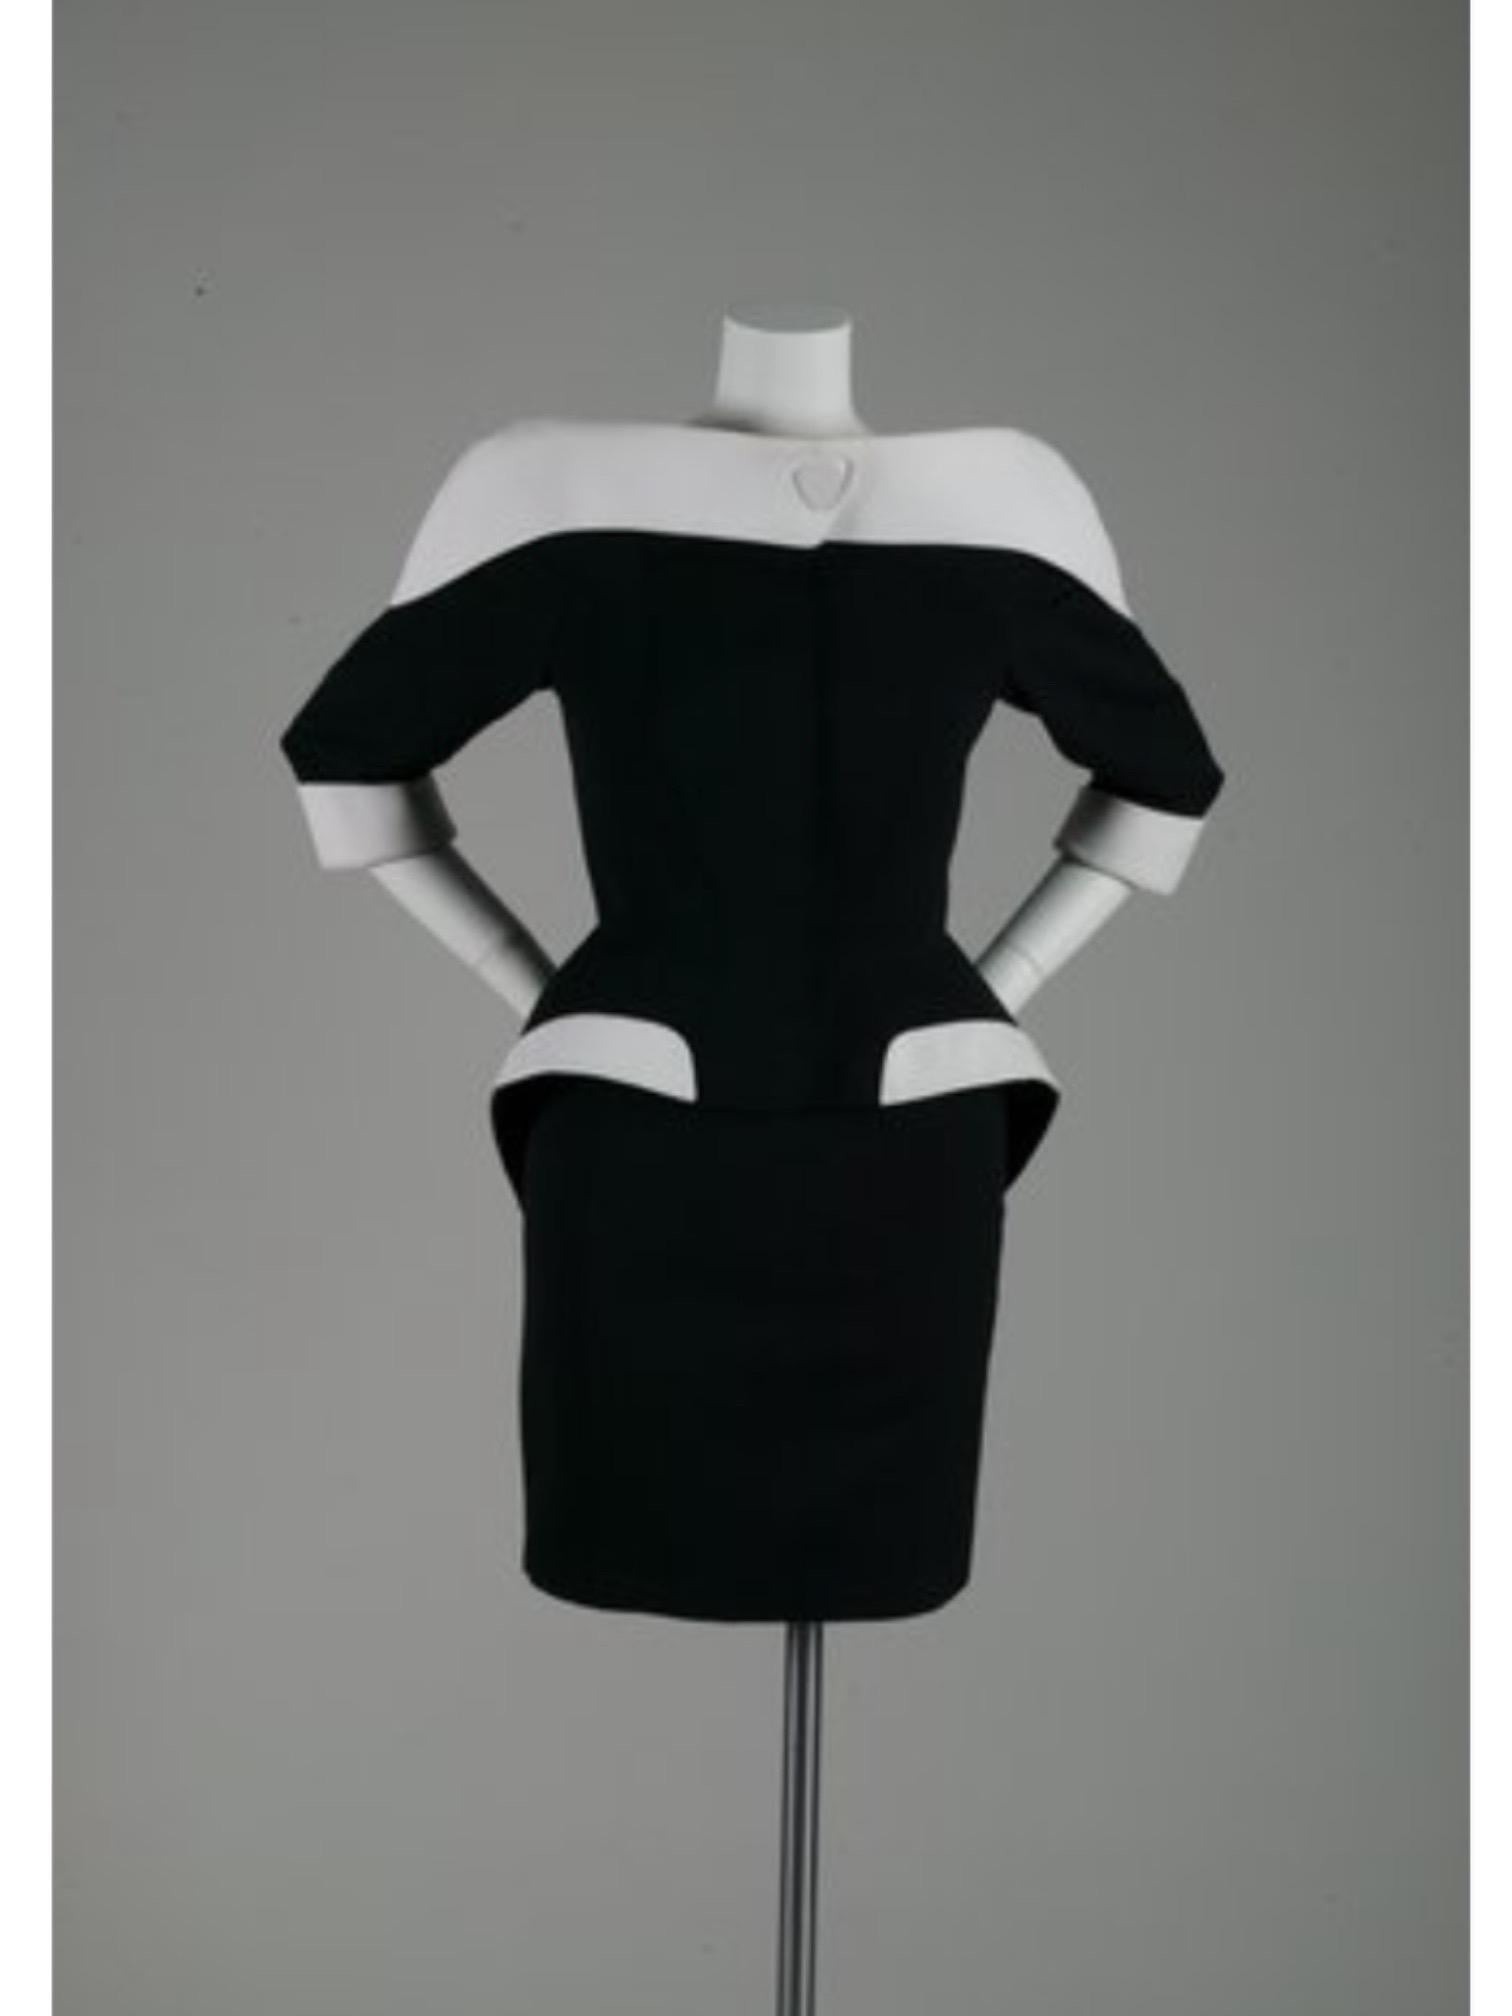 S/S 1996 Thierry Mugler Sculptural Runway Museum Skirt Suit Ensemble For Sale 4